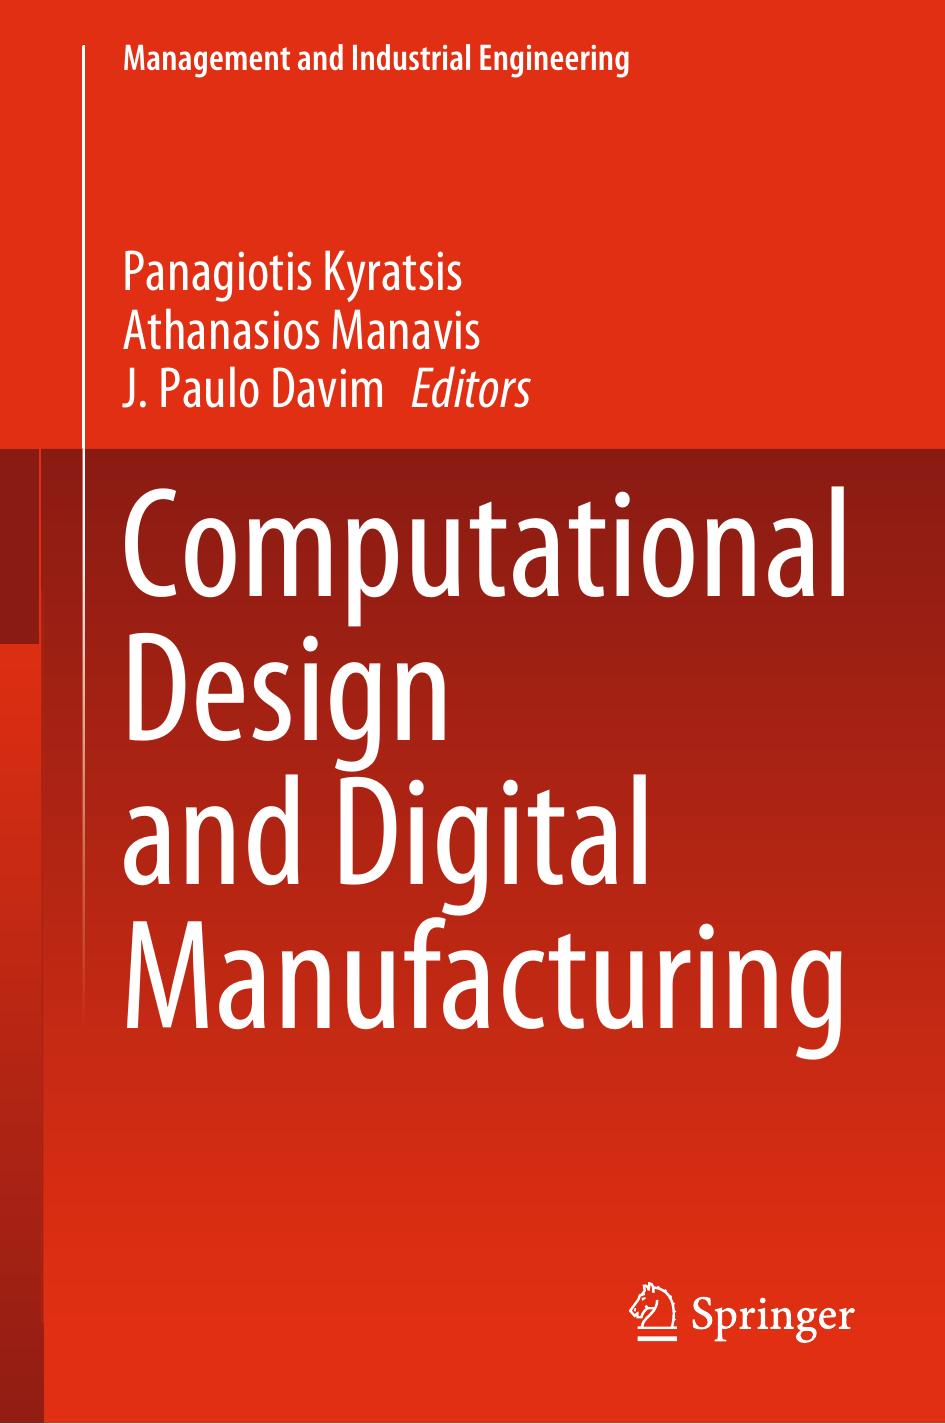 Computational Design and Digital Manufacturing